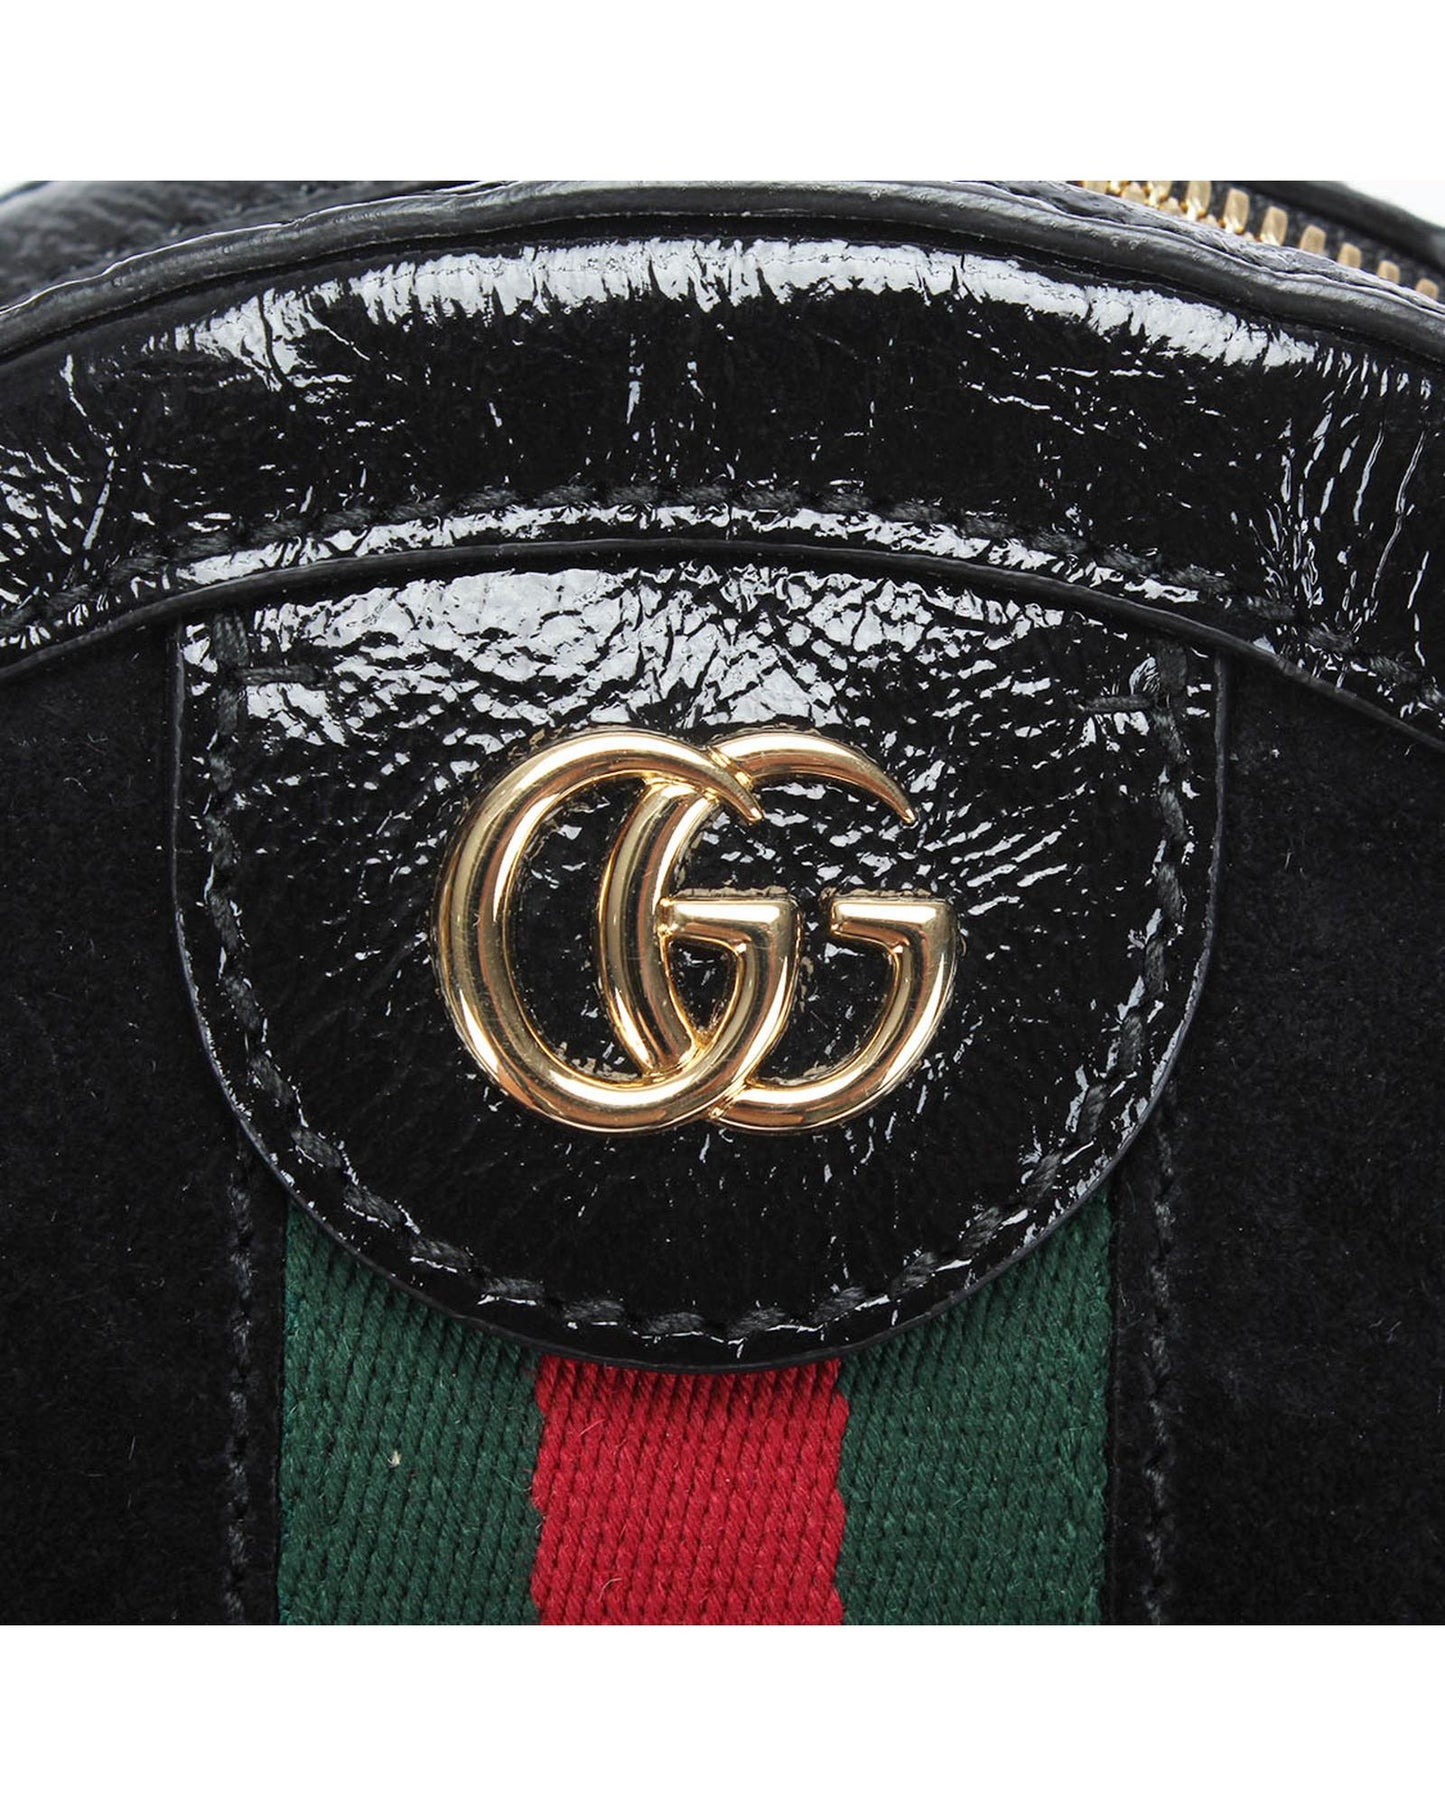 Gucci Women's Mini Black Suede Round Shoulder Bag in black